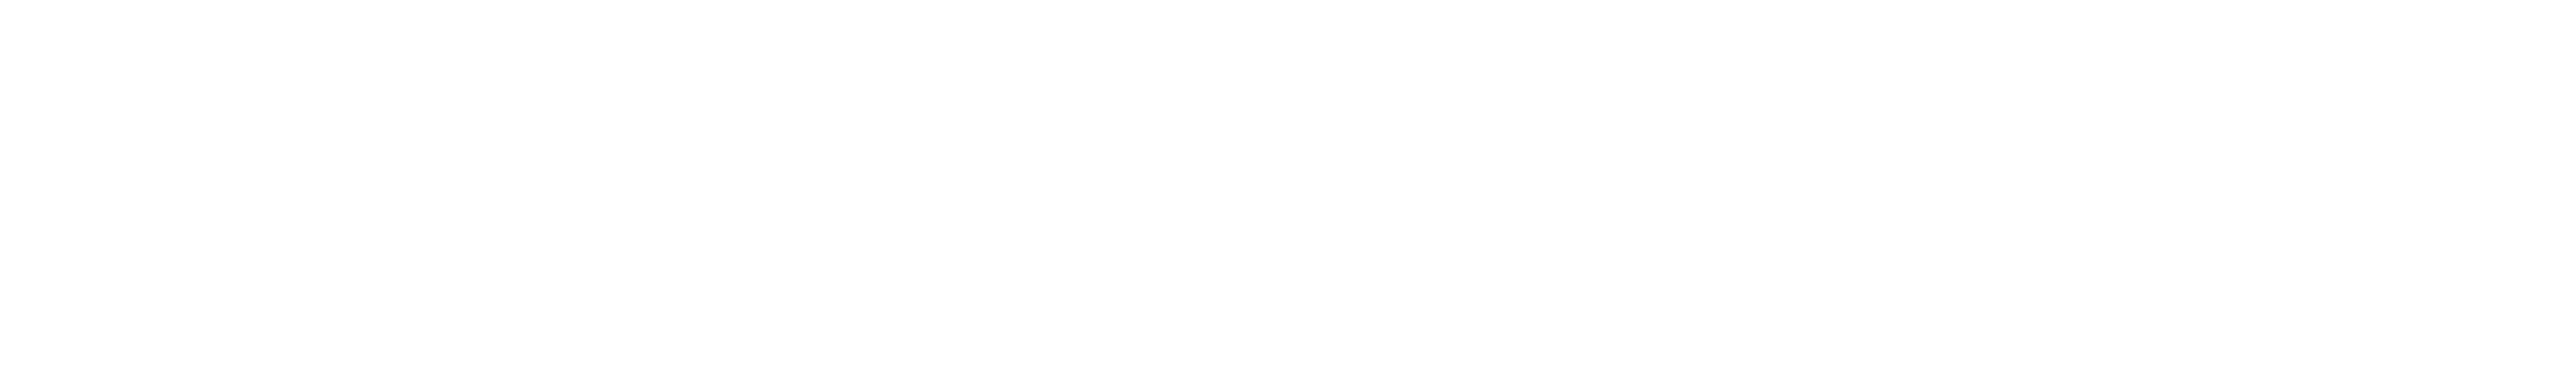 New Zealand Government - Te Kāwanatanga o Aotearoa